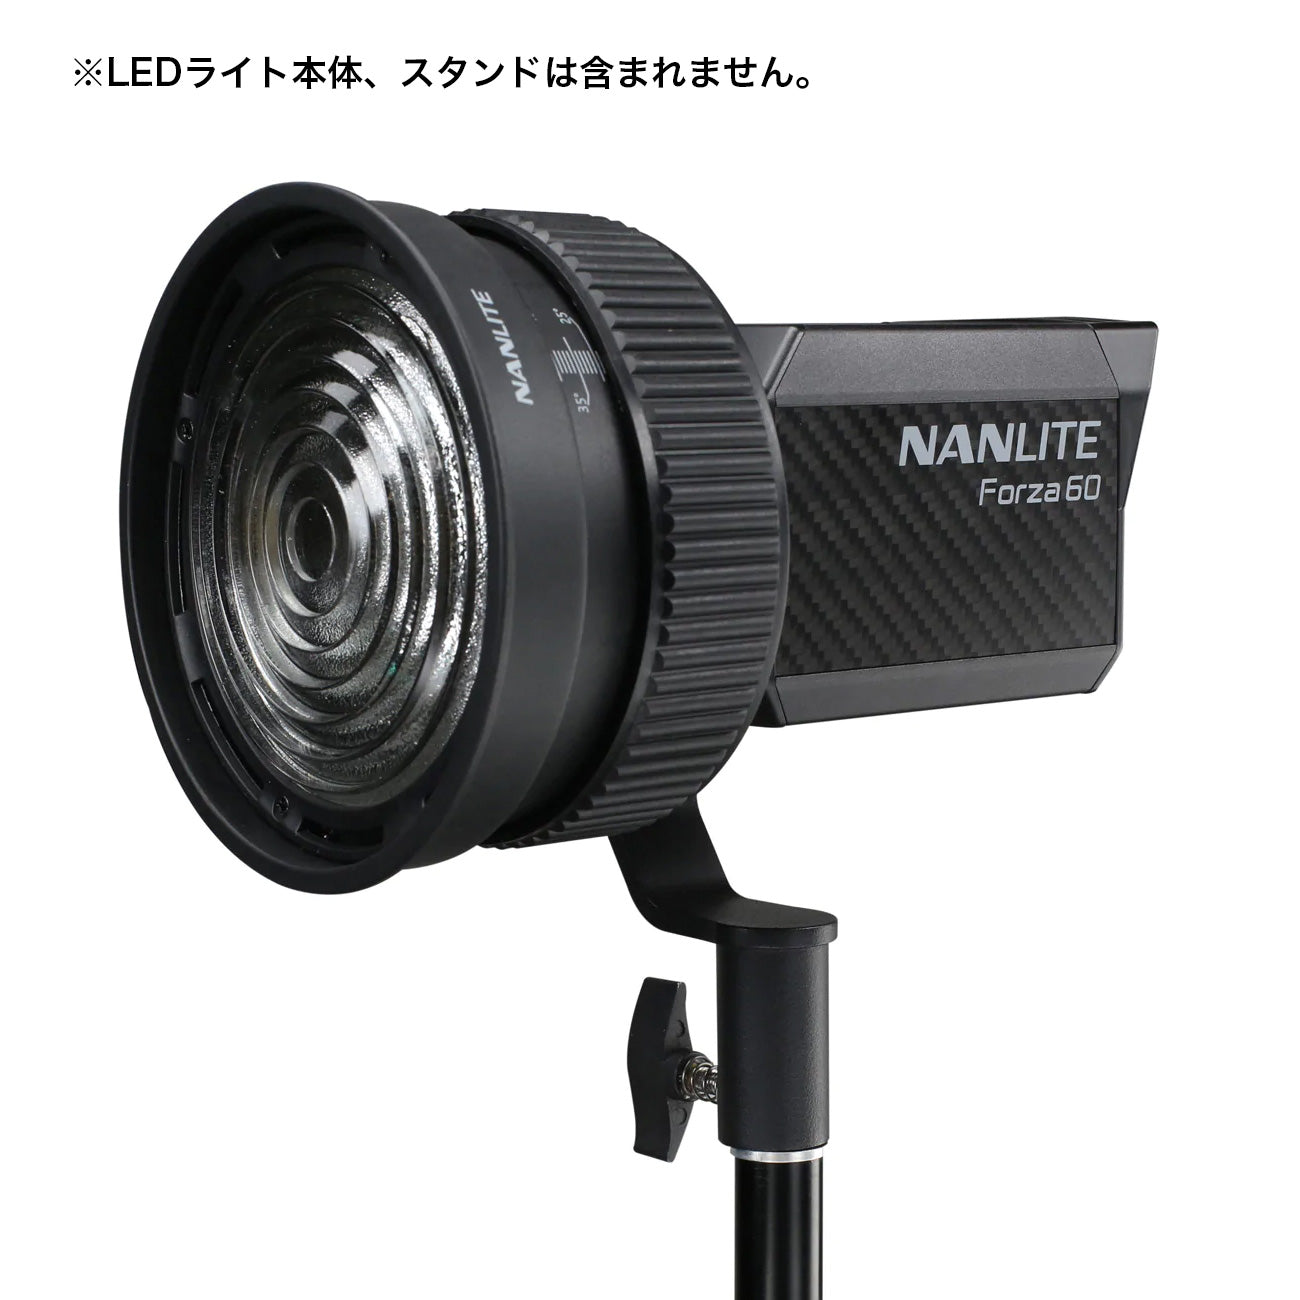 NANLITE(ナンライト) Forza60シリーズ専用フレネルレンズ(バーンドア